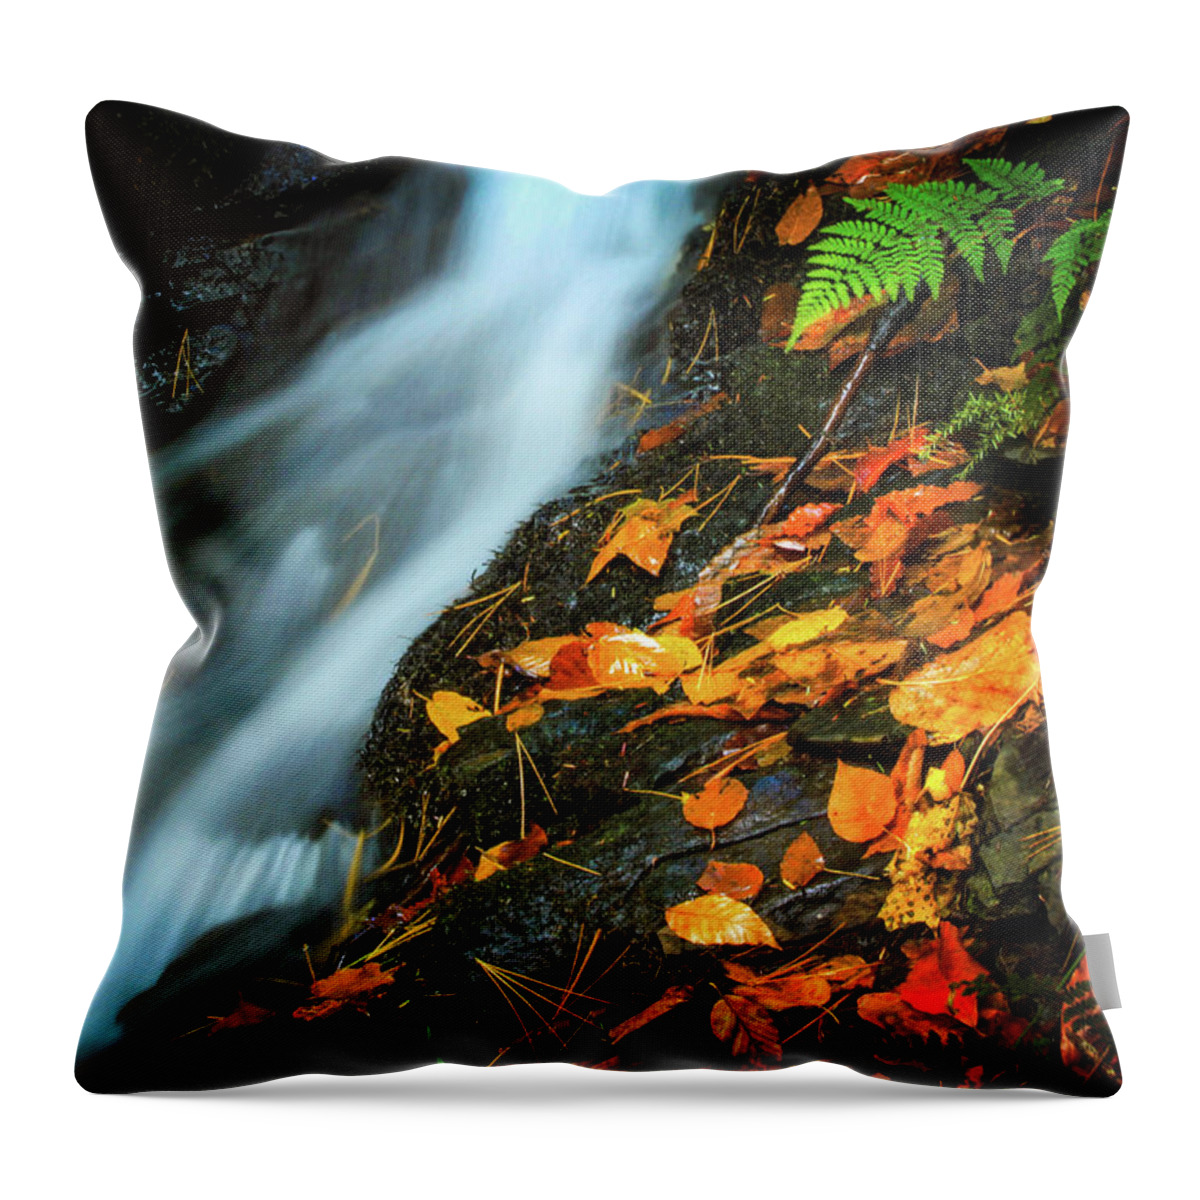 Fall Beside A Forest Stream Throw Pillow featuring the photograph Fall Beside a Forest Stream by Carolyn Derstine